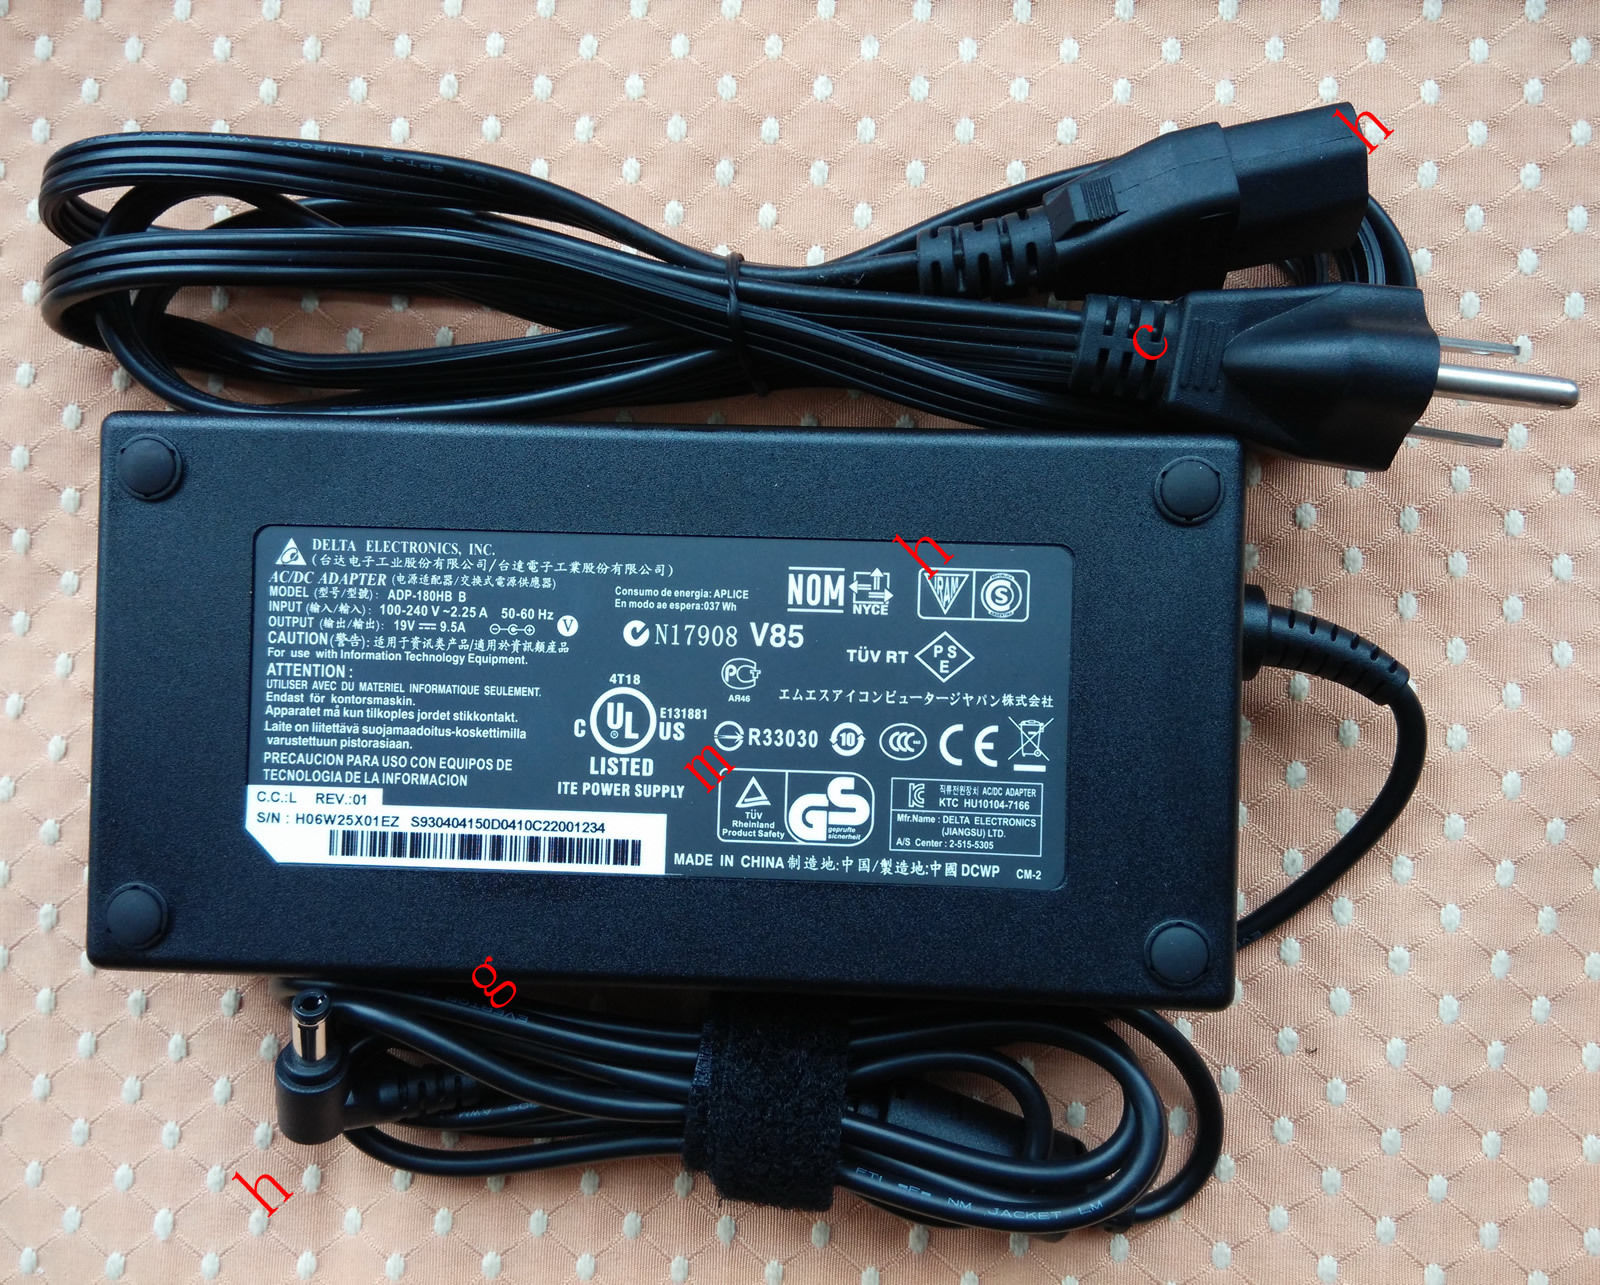 MSI Delta ADP-180HB B,S93-0404150-D04 180W 19V 9.5A AC Adapter for MSI GT60 0NE-262AU Notebook